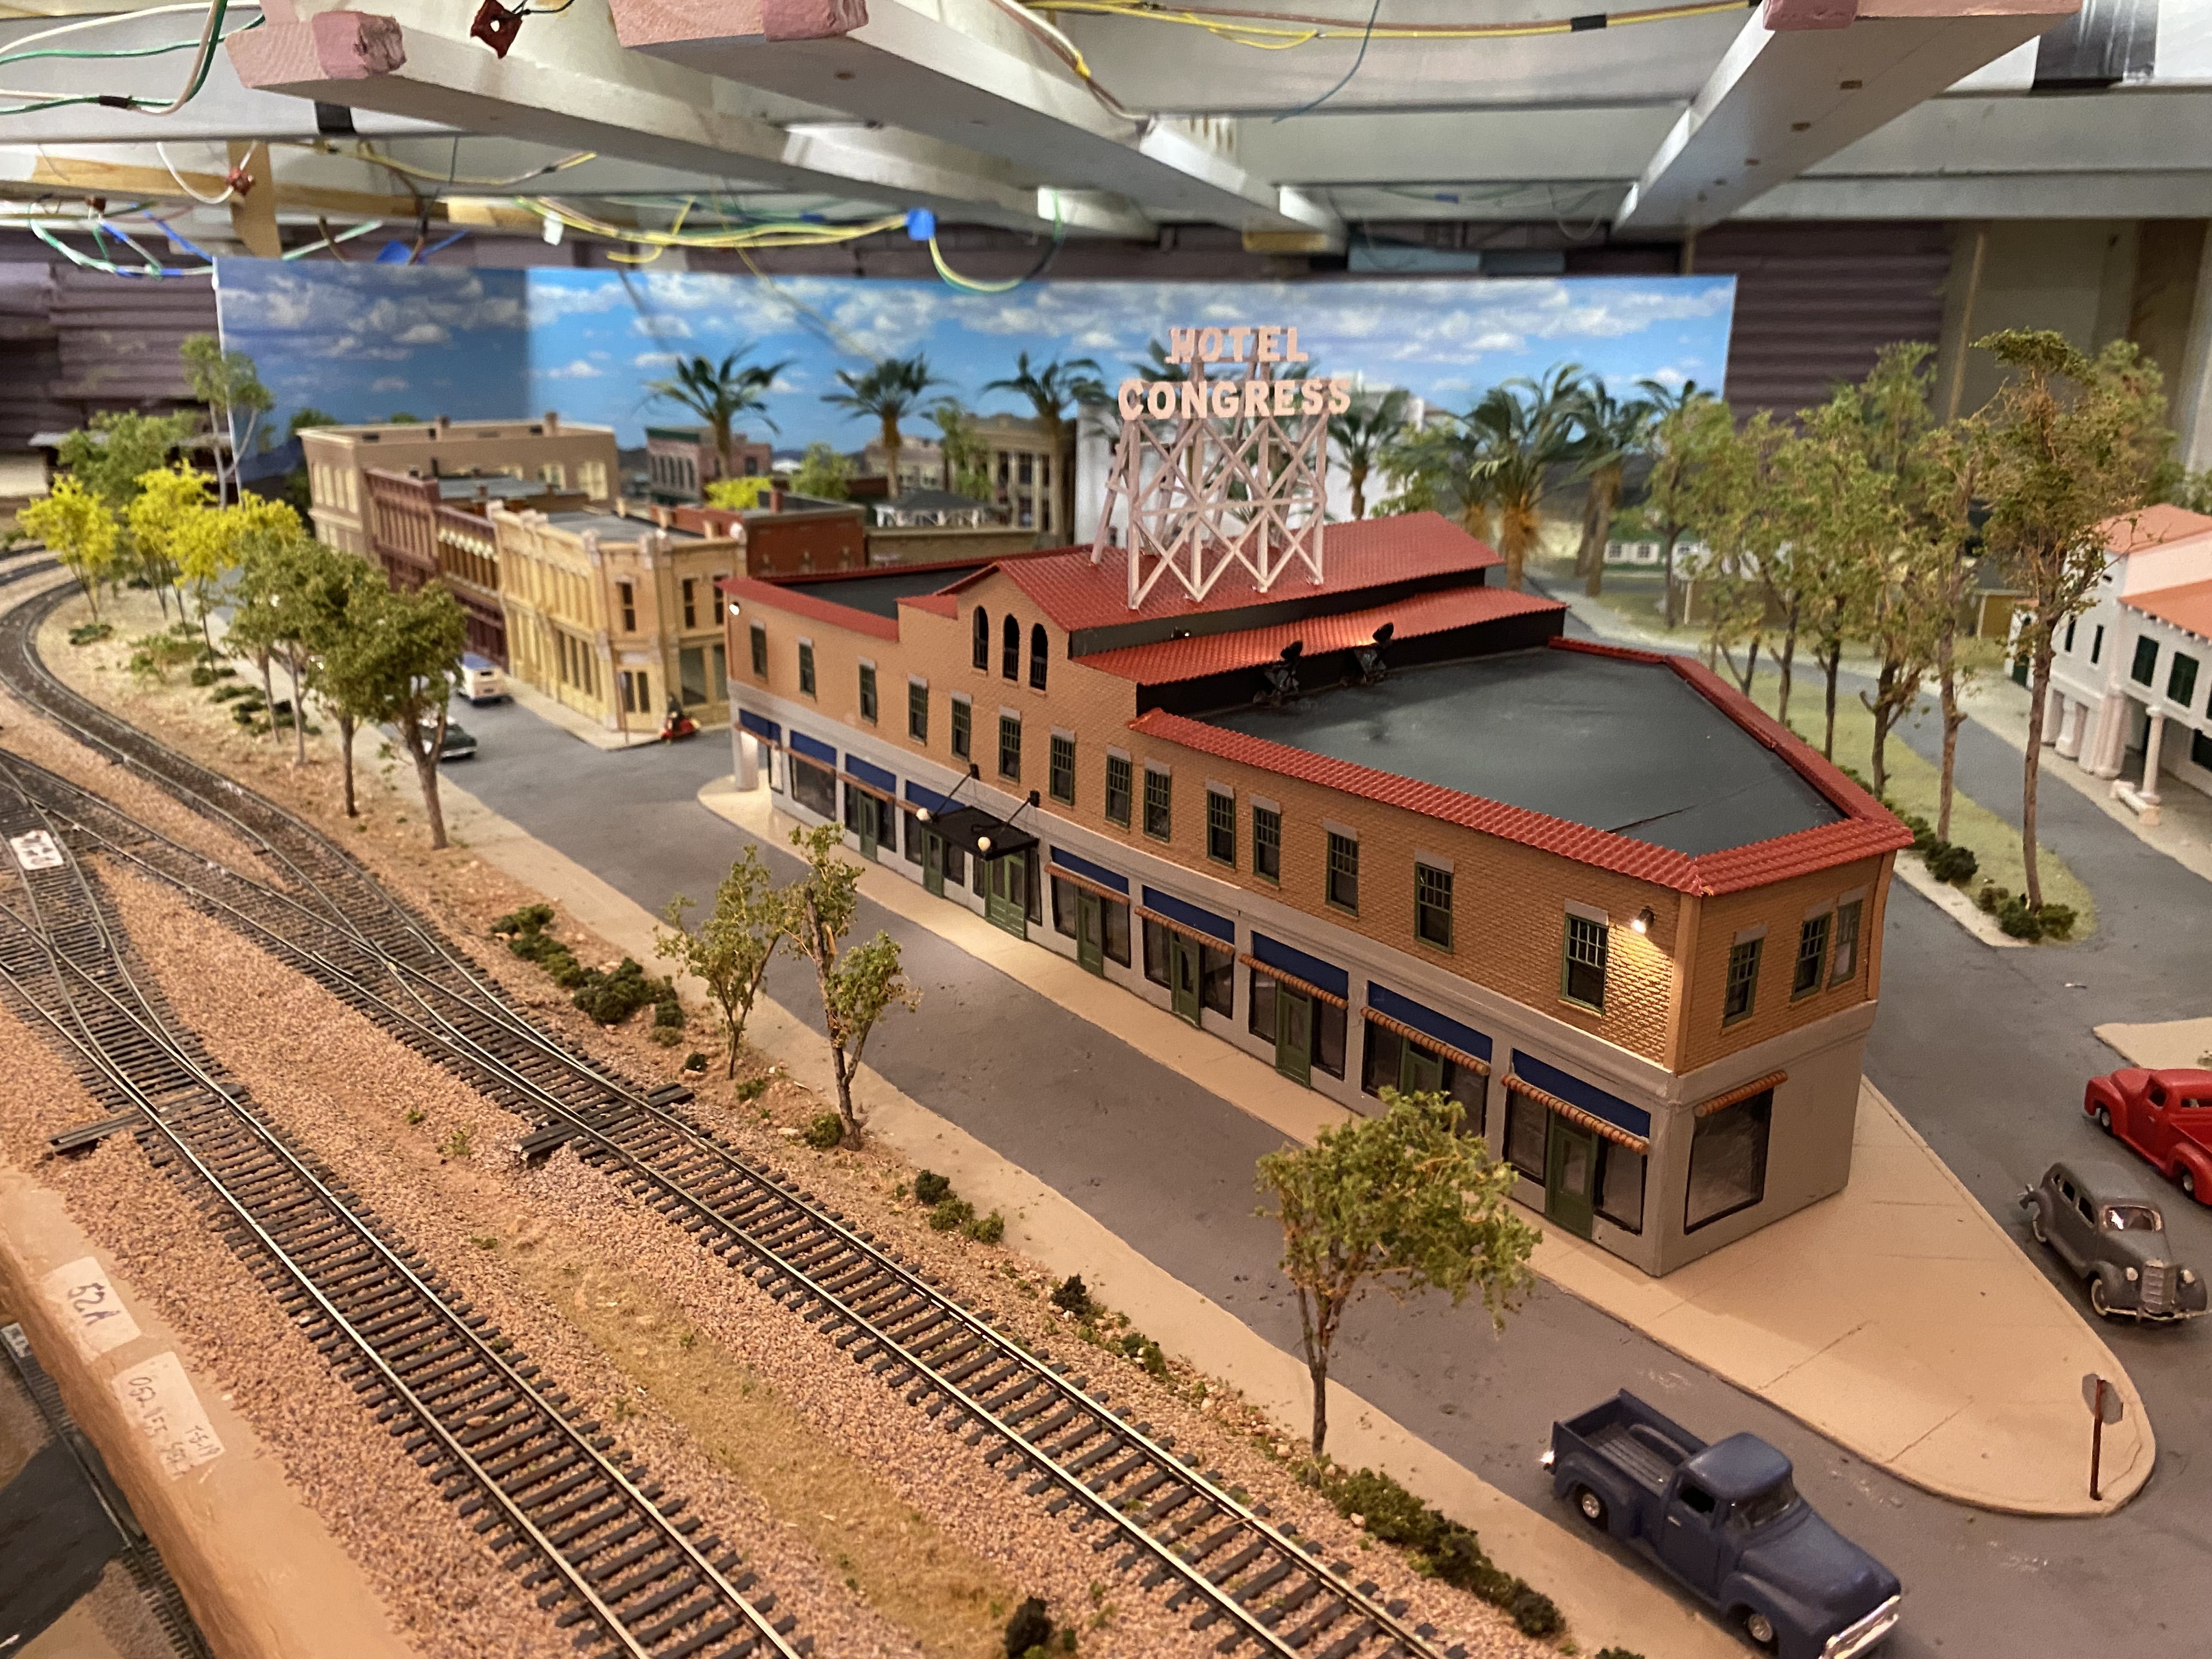 A model of Tucson's Hotel Congress along a model train track